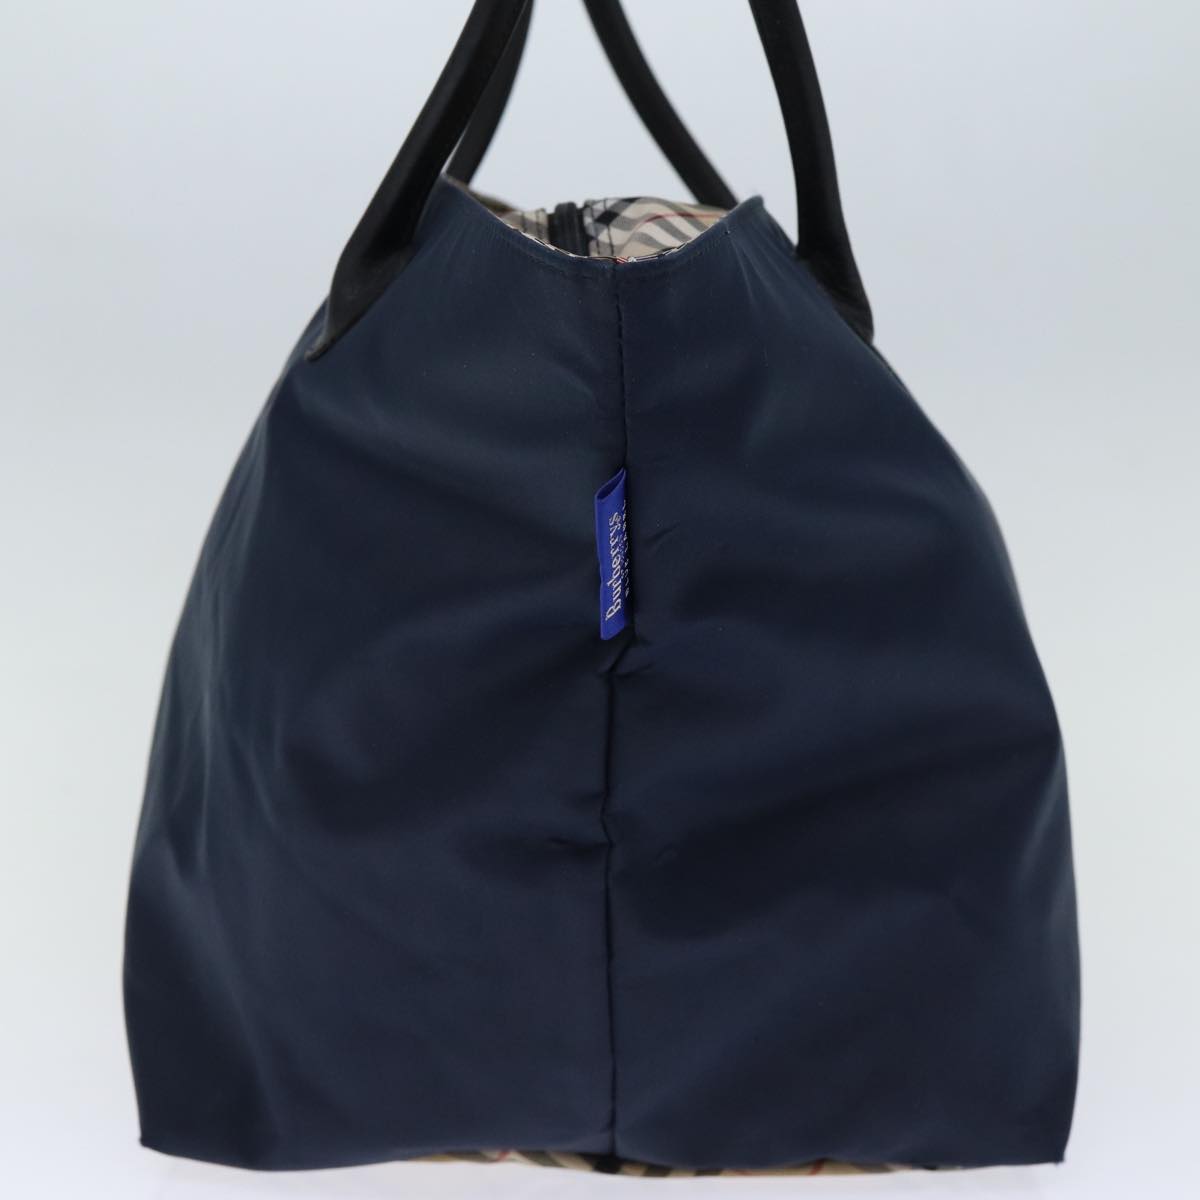 Burberrys Nova Check Blue Label Tote Bag Nylon Navy Beige Auth bs13707